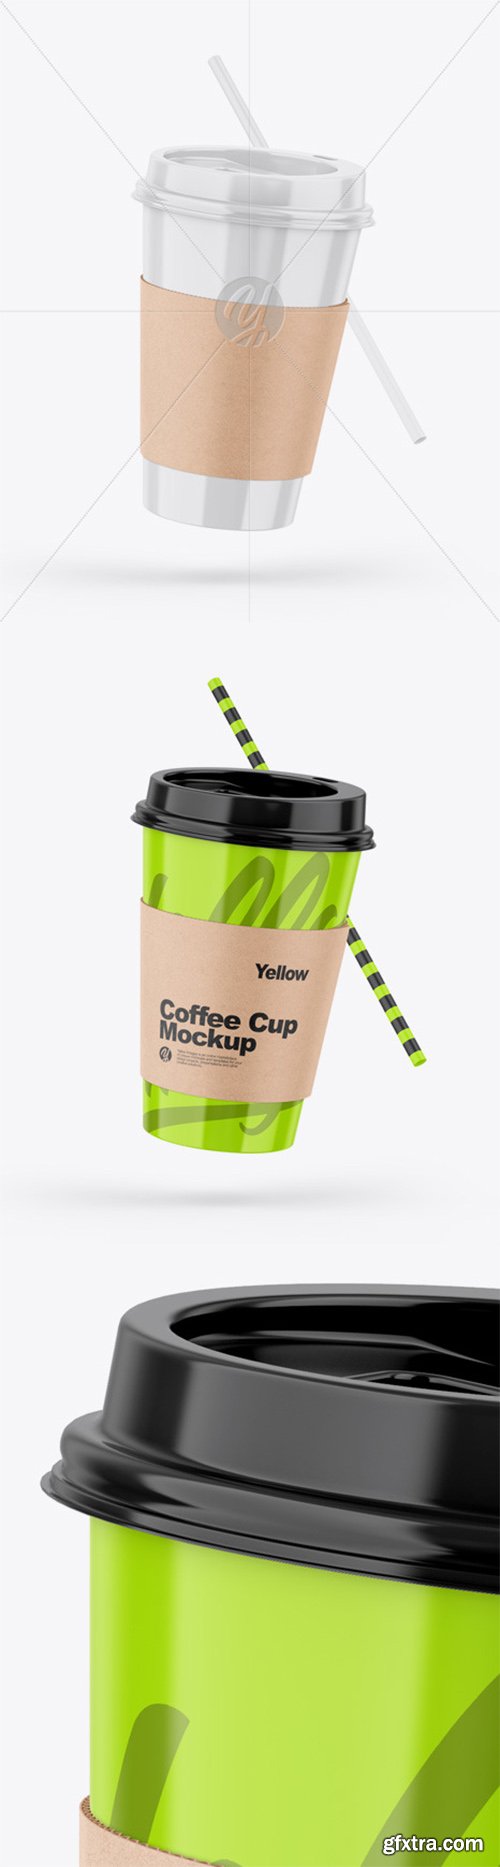 Glossy Coffee Cup W/ Straw Mockup 51972